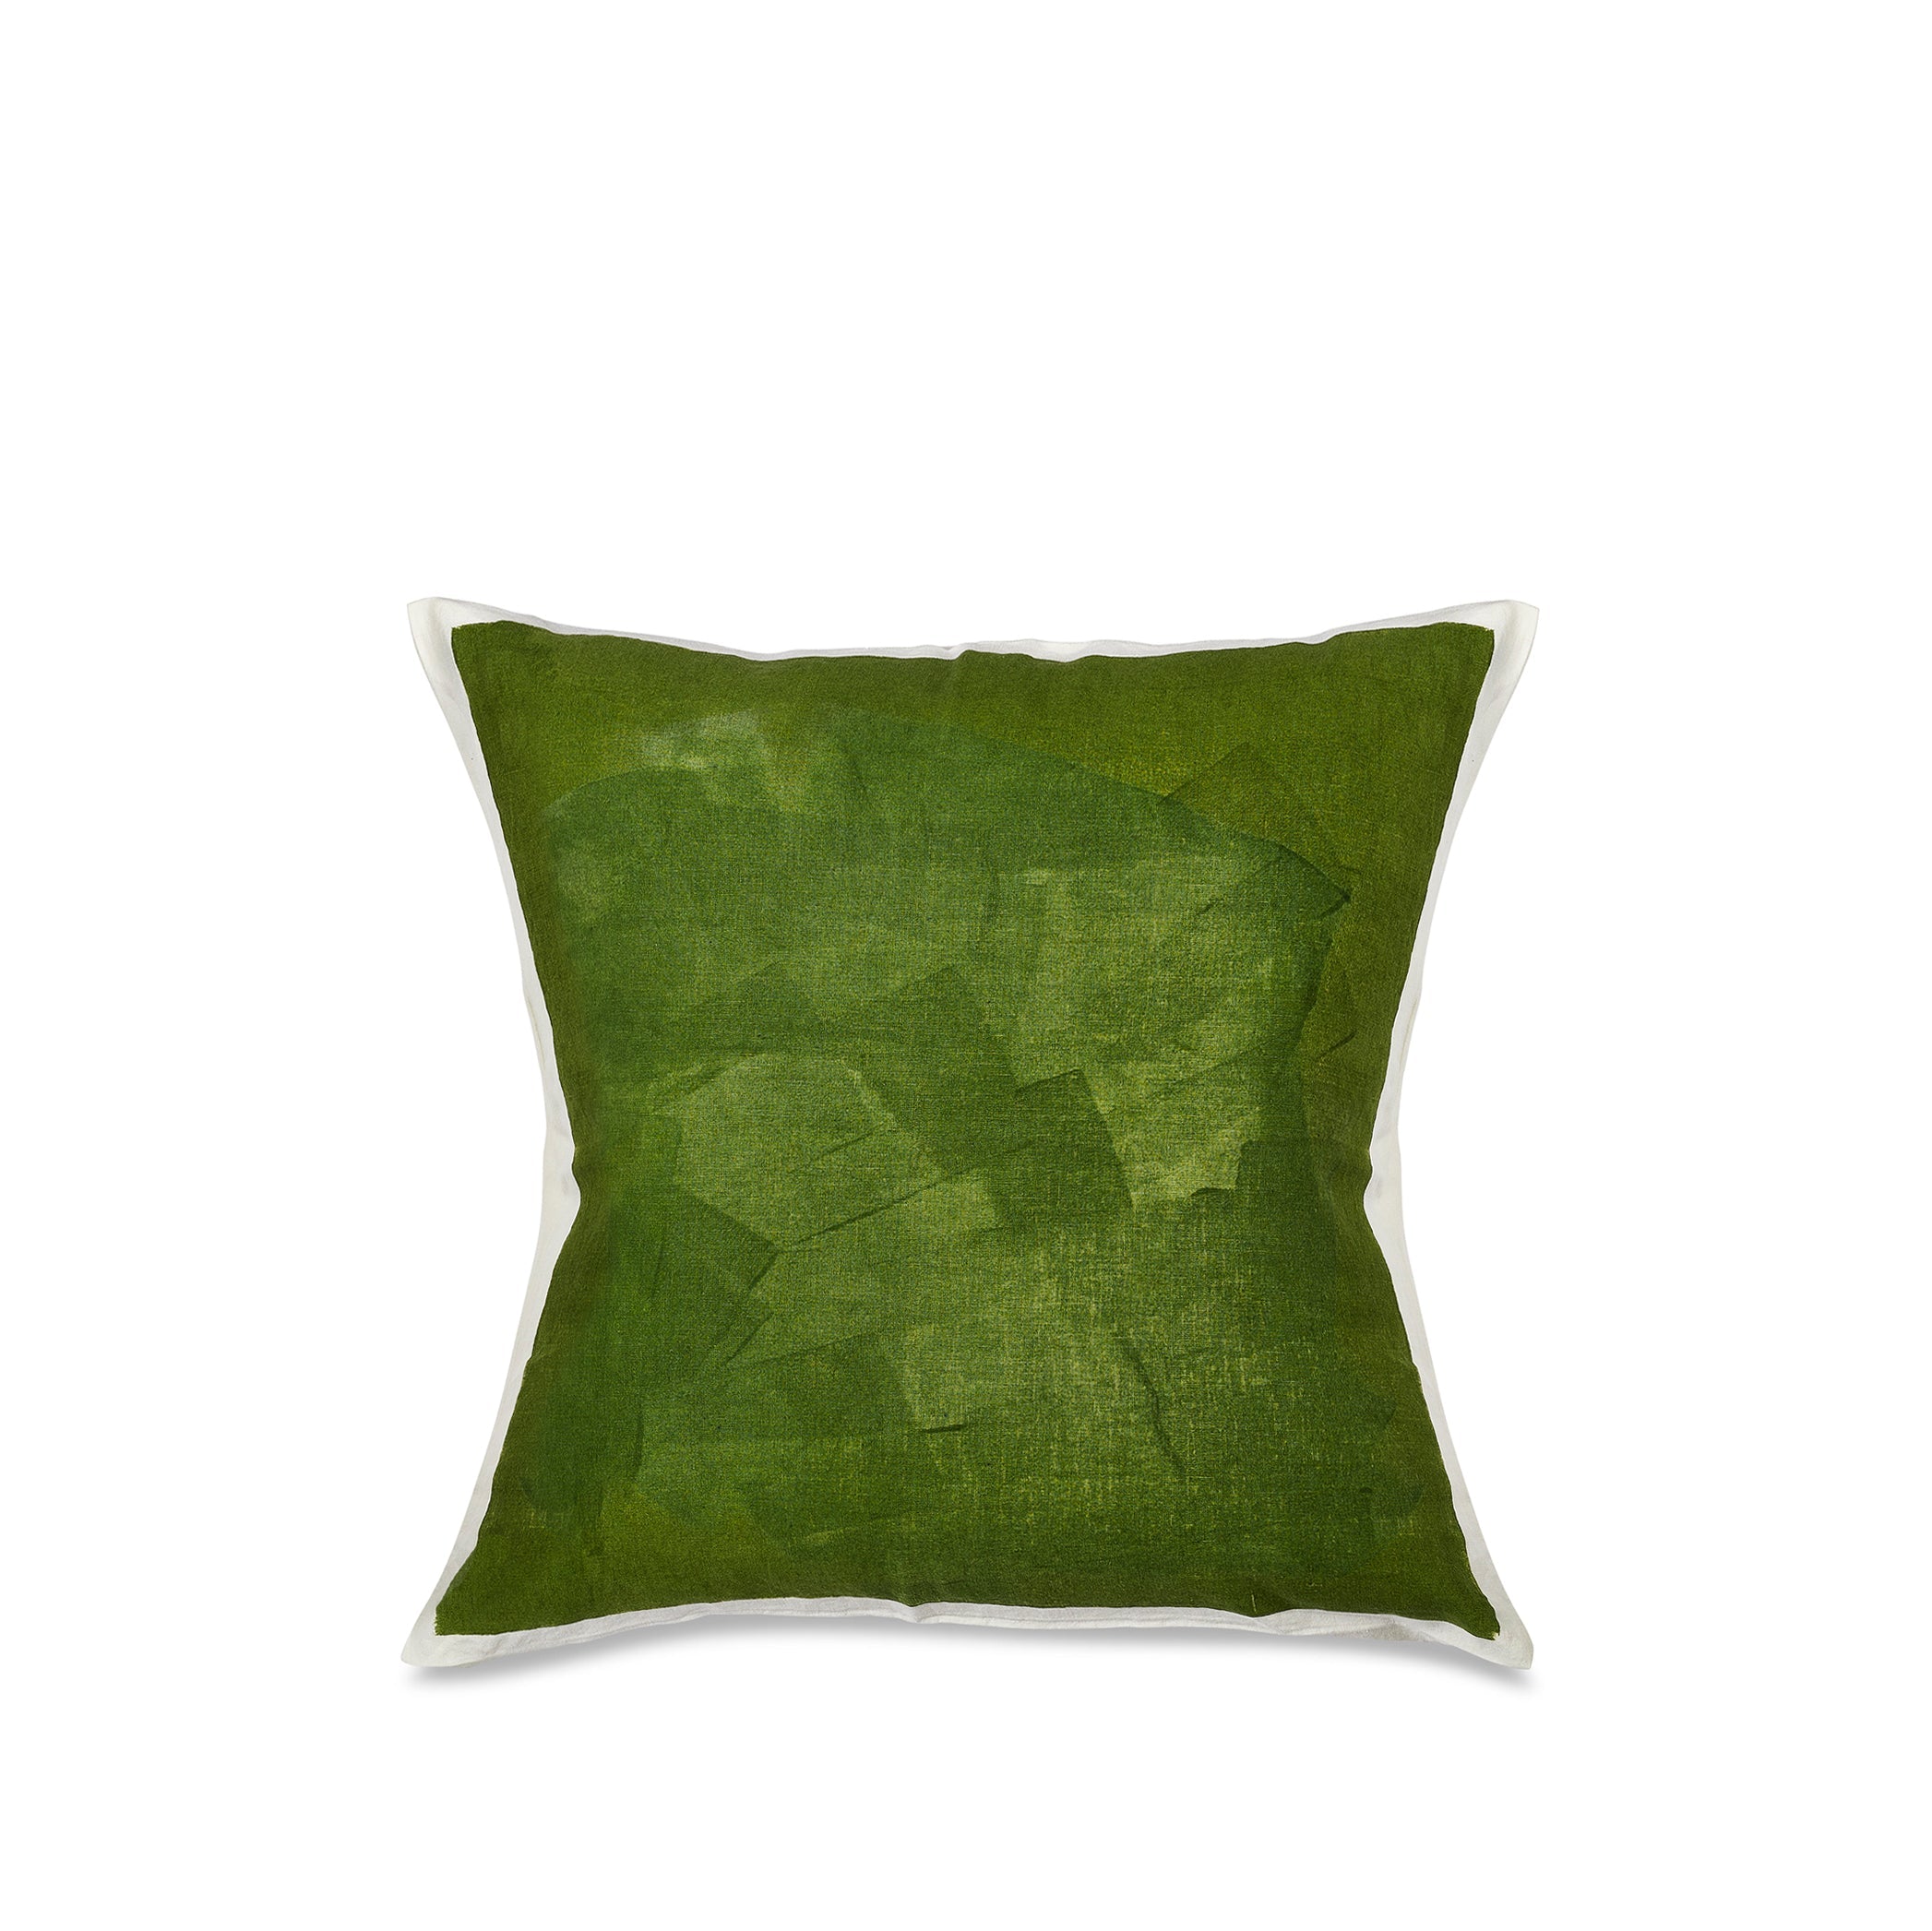 Hand Painted Linen Cushion in Avocado Green, 60cm x 60cm